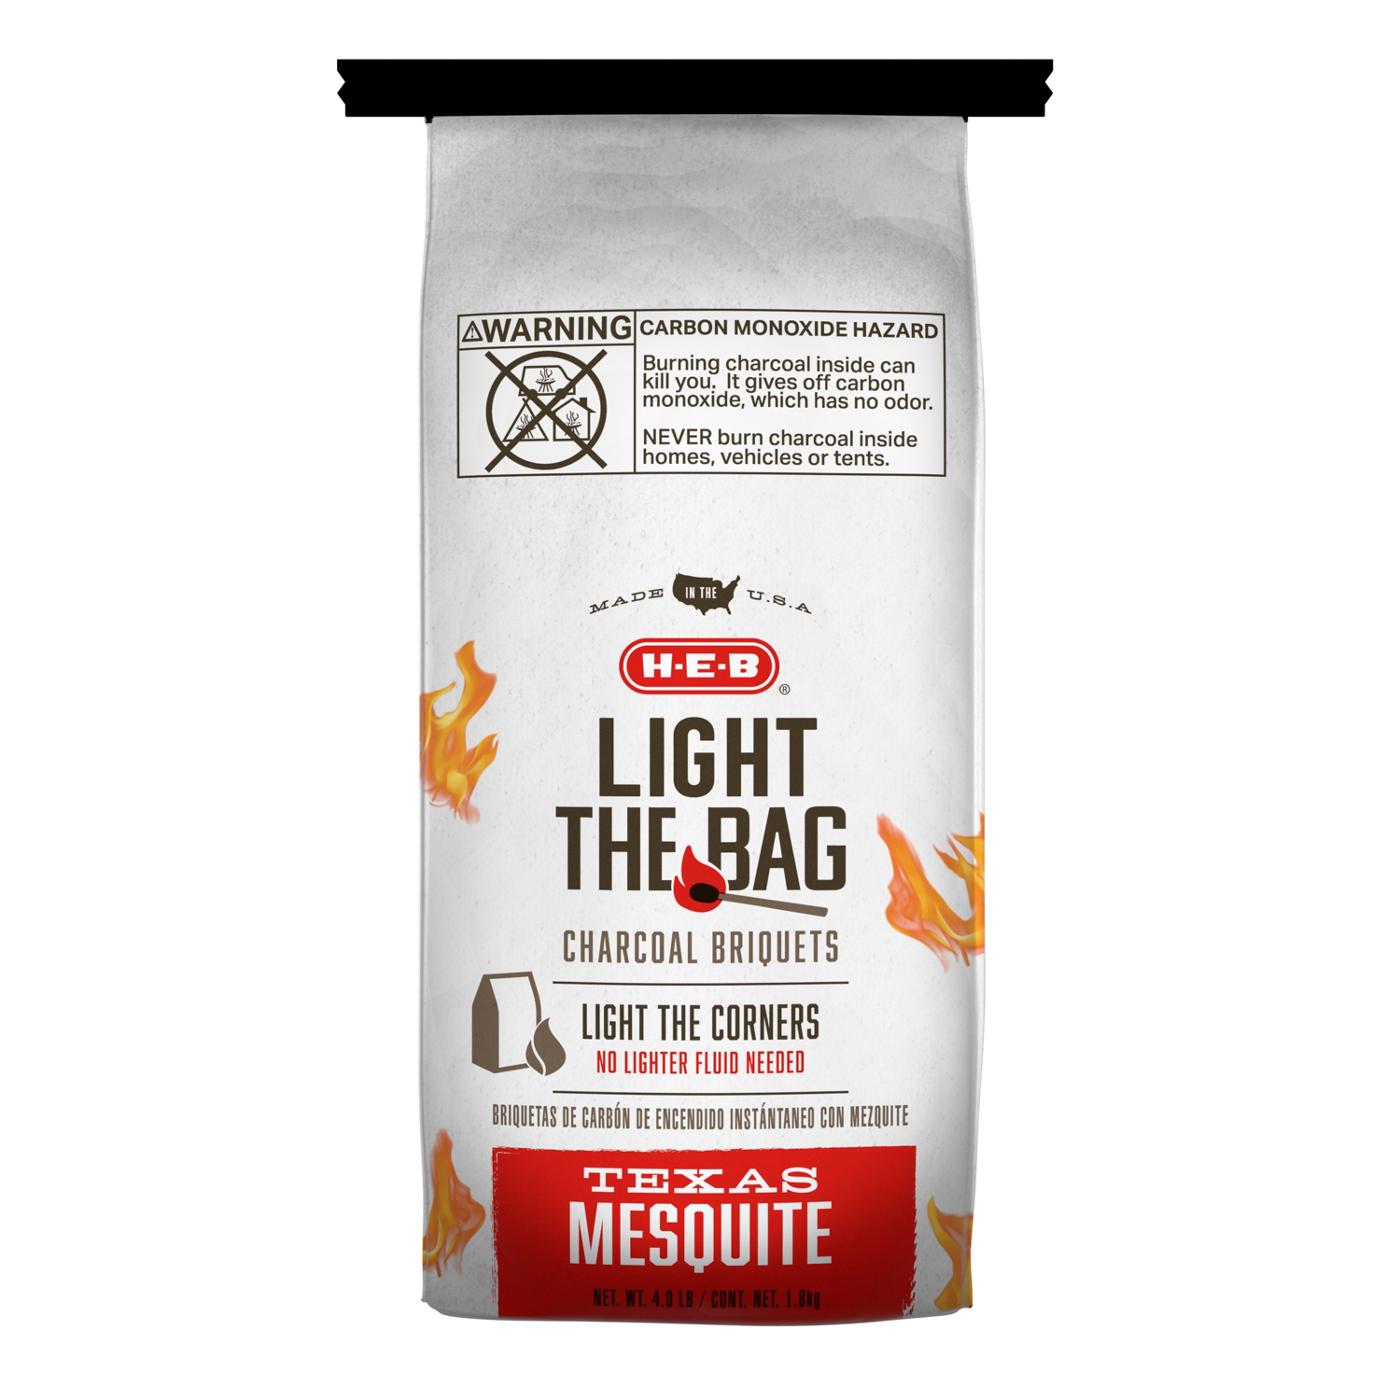 H-E-B Texas Mesquite Light the Bag Charcoal Briquets; image 1 of 2